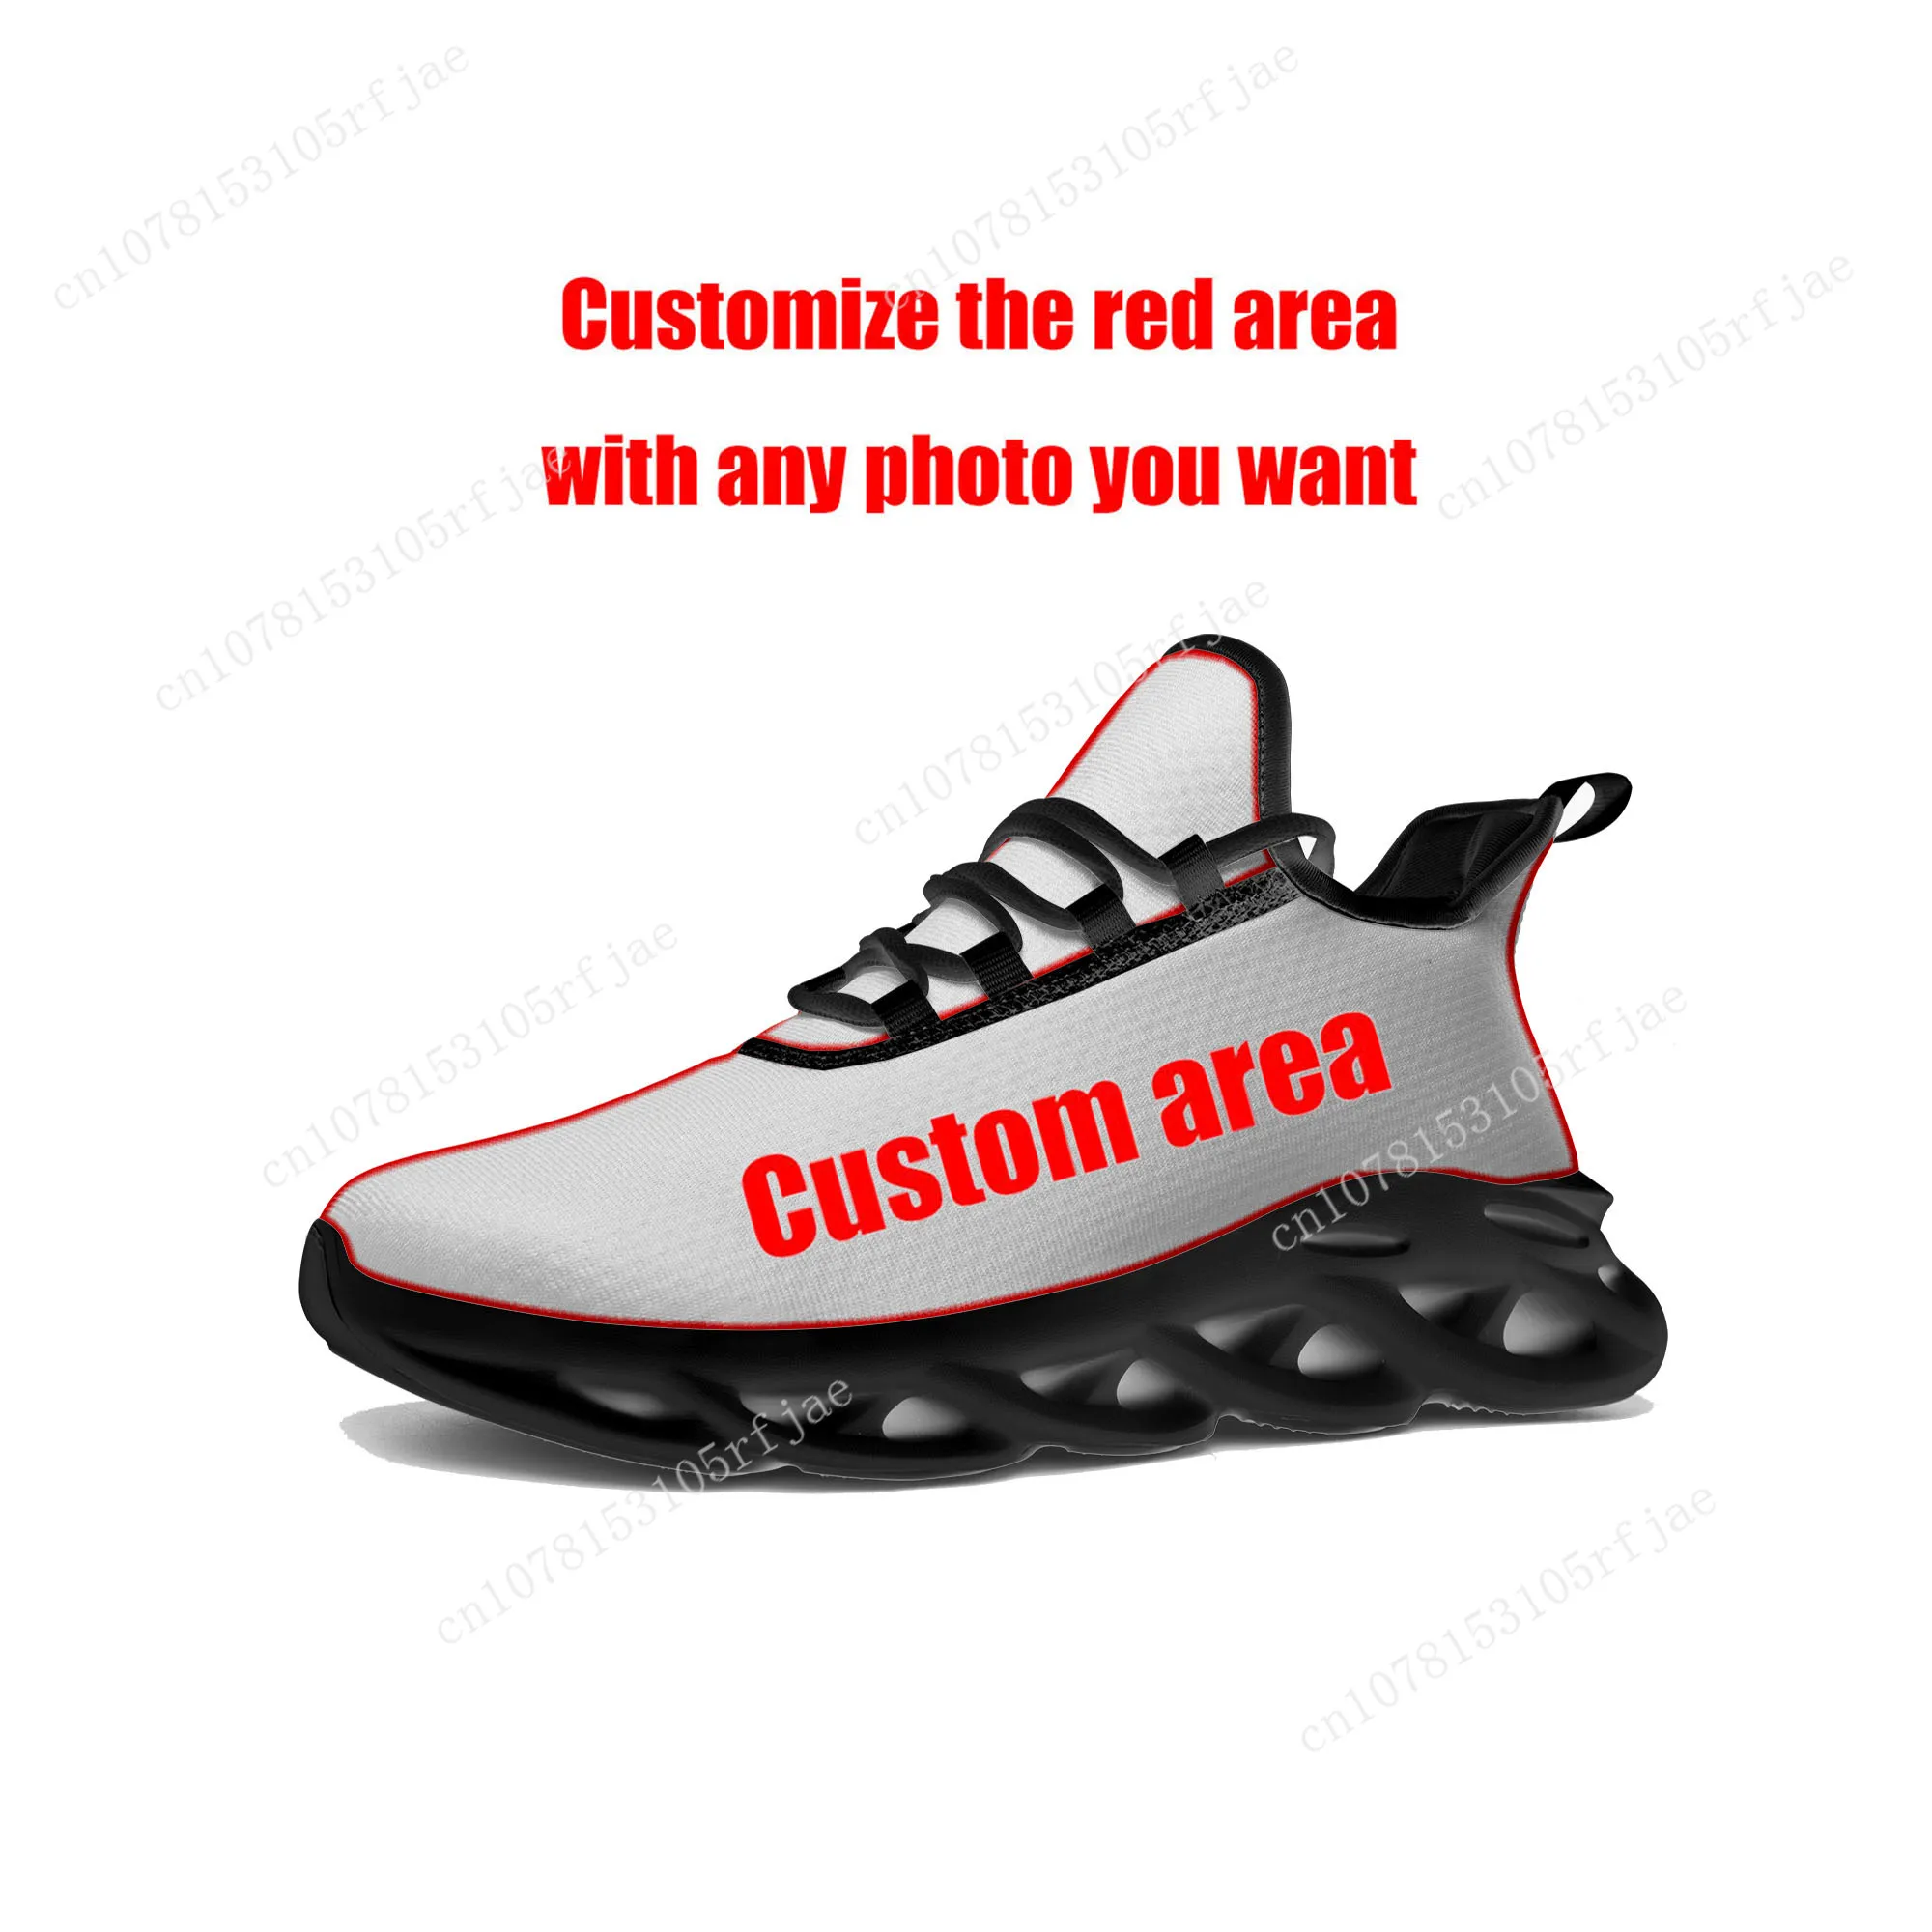 Hot Cupheads Mugmans Cartoon Game Flats Sneakers uomo donna adolescente scarpe da corsa sportive scarpe stringate su misura di alta qualità